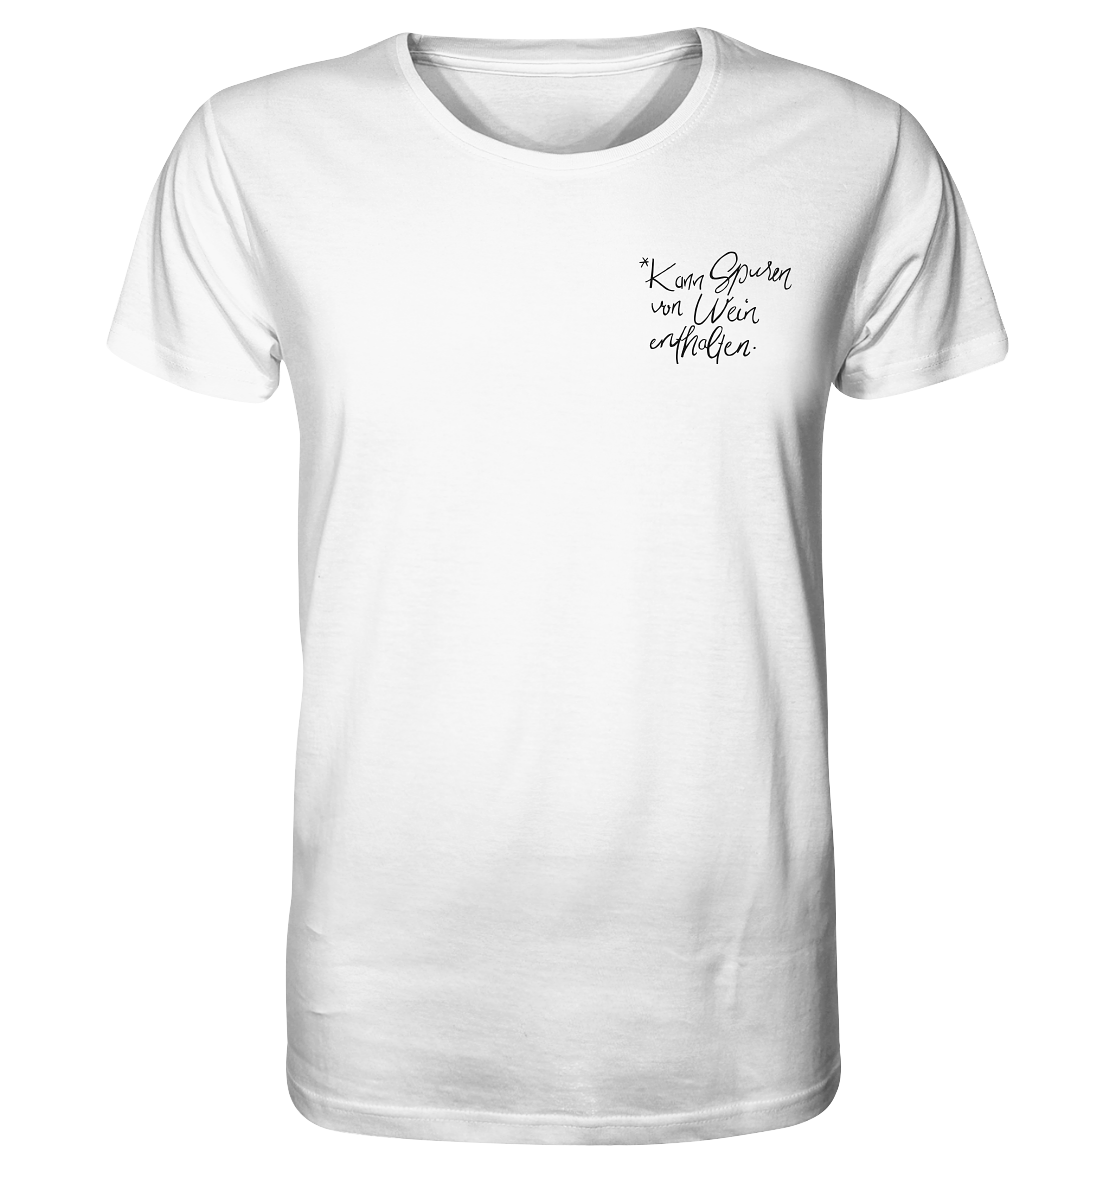 front-organic-shirt-f8f8f8-1116x.png